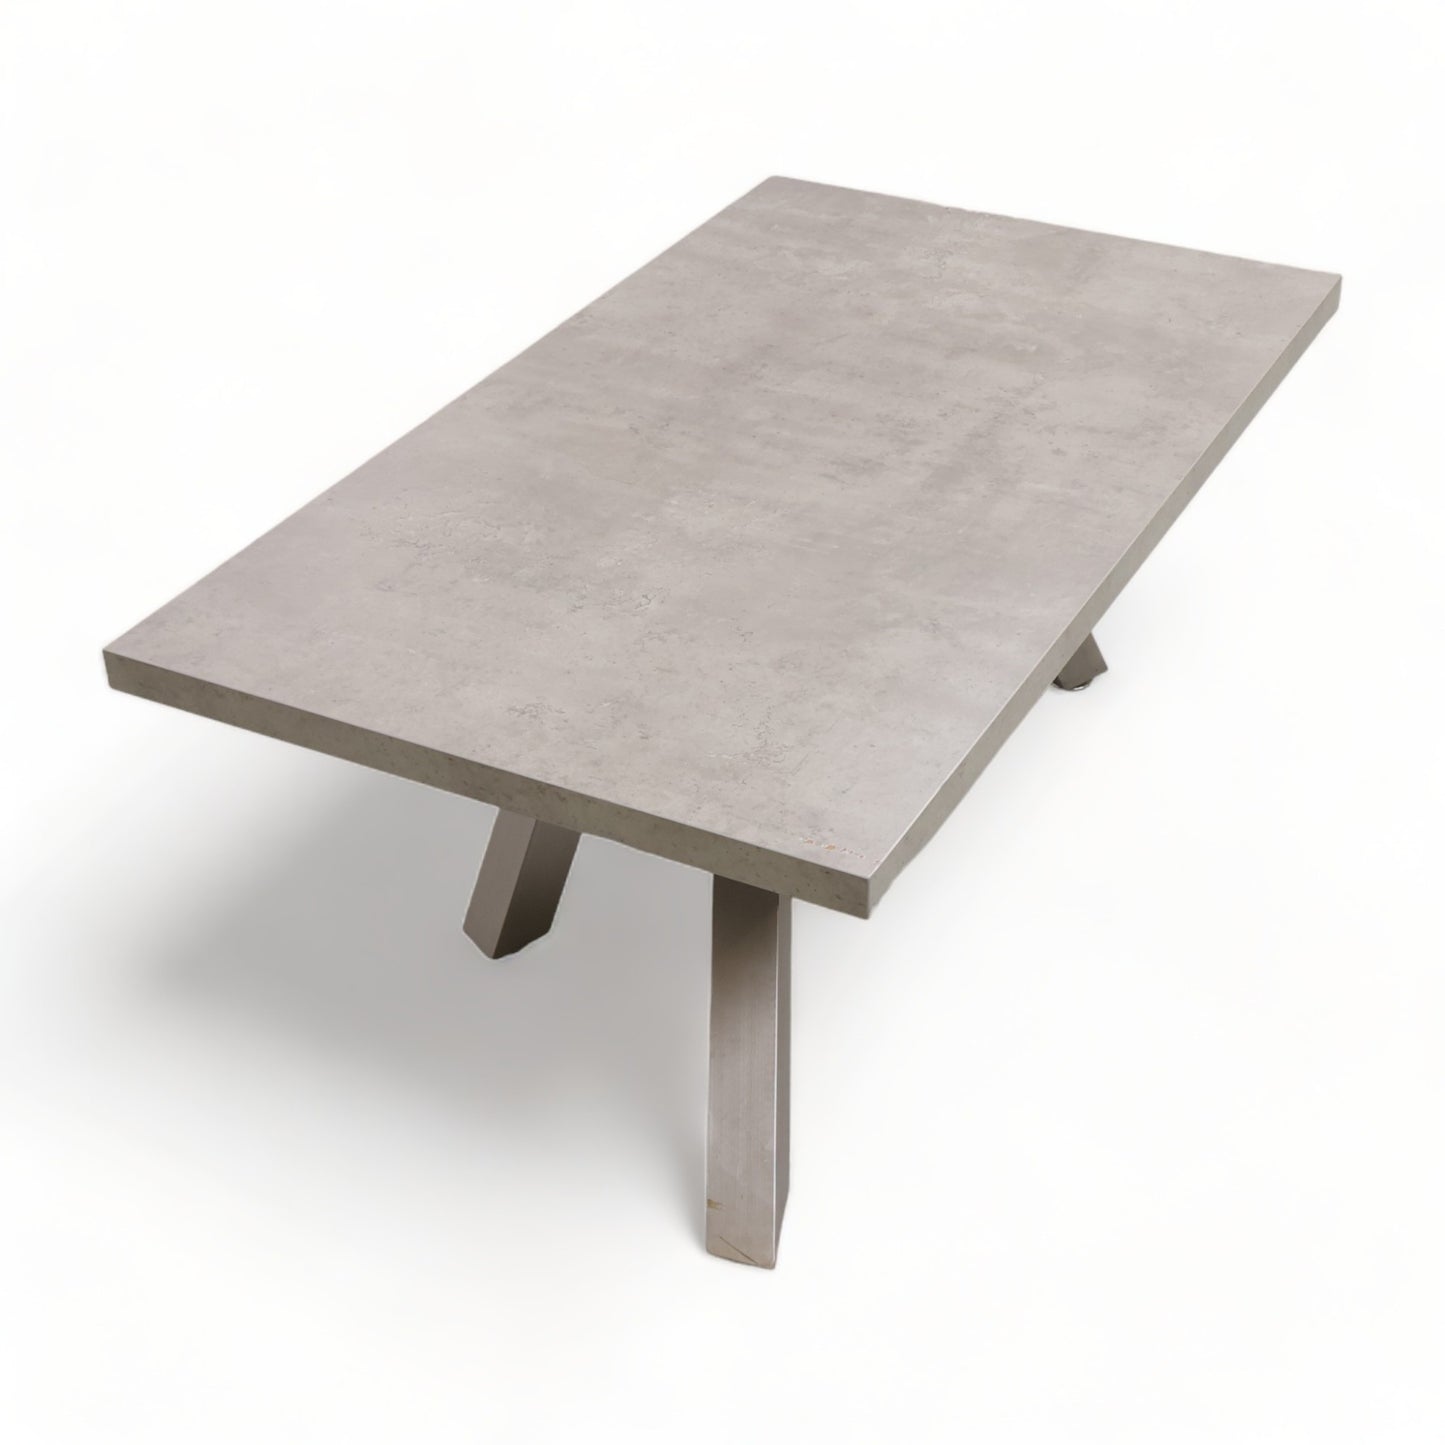 Kvalitetsikret | Sofabord i en røff look 120x70